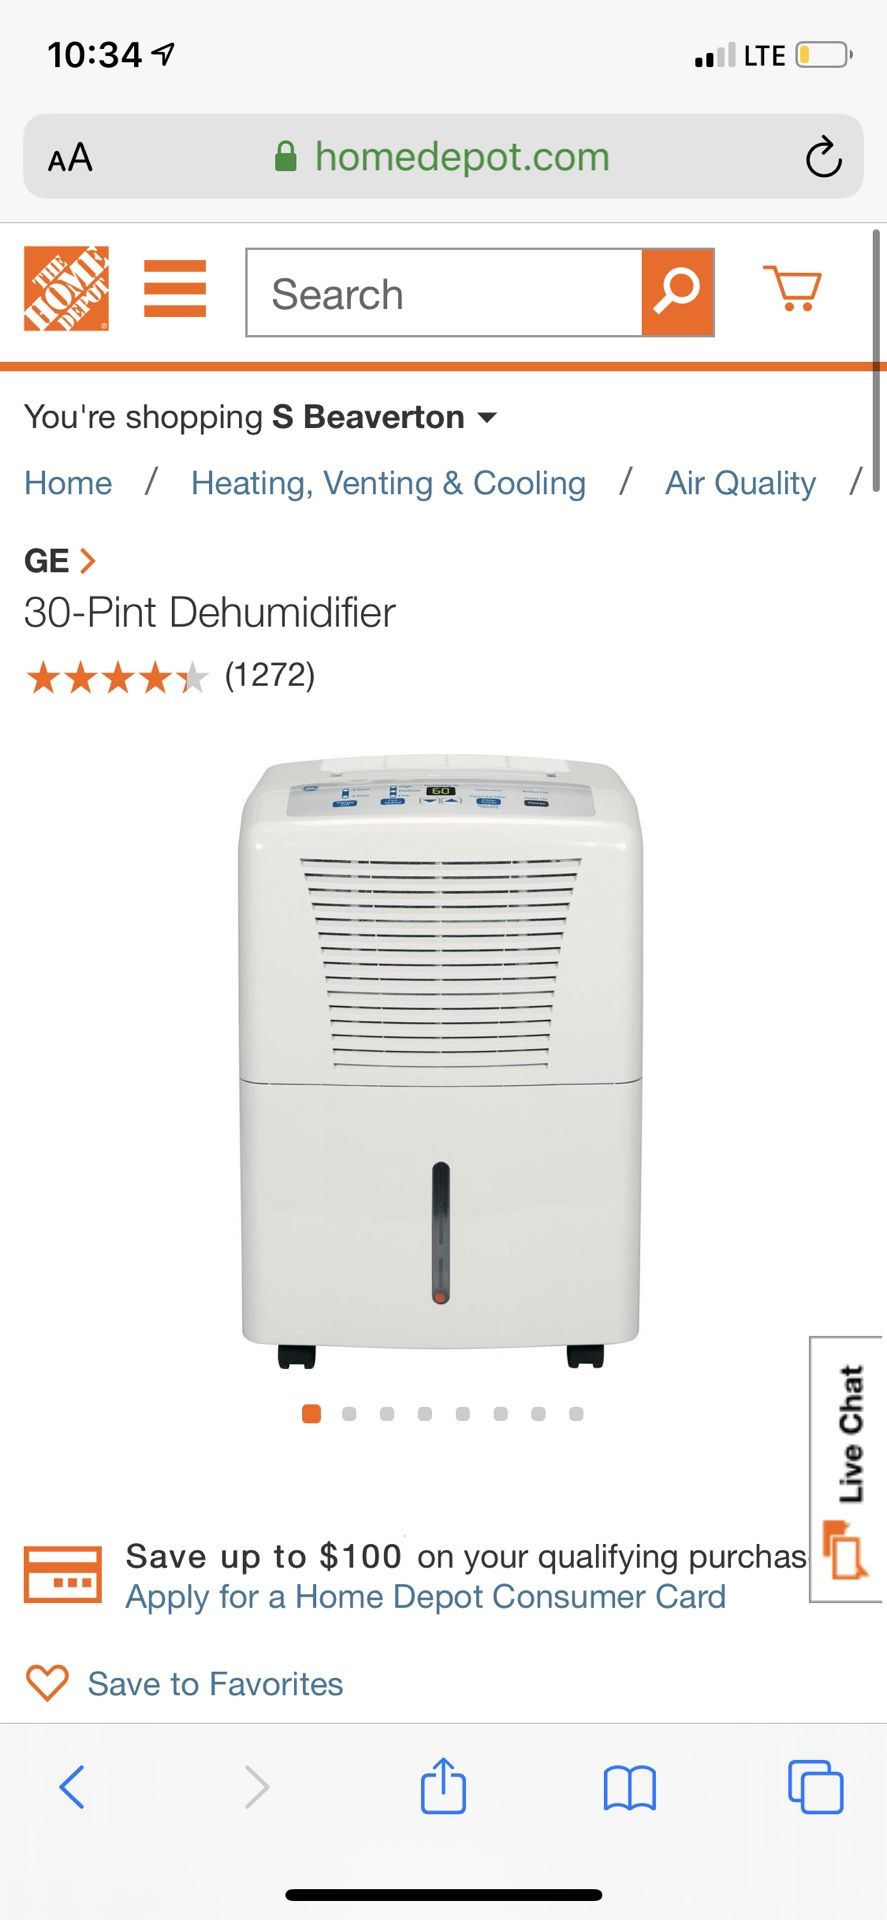 GE 30-Pint Dehumidifier